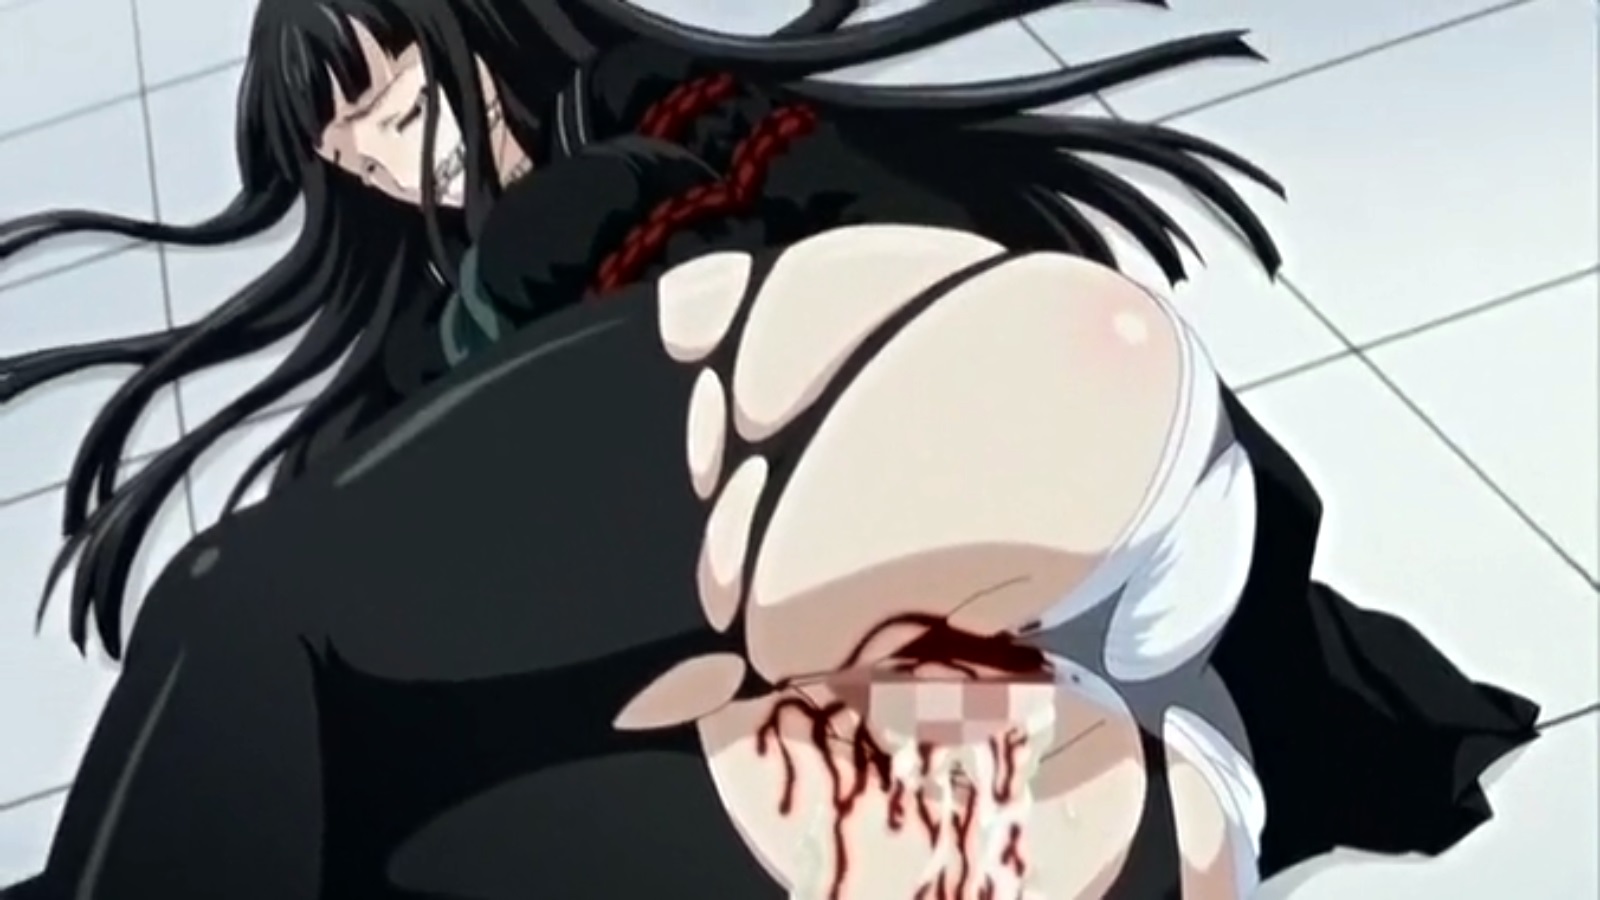 Hentai Anal Abuse - Brutal Hentai Movie Rape, Blood, Ache, Death | HentaiMovie.Tv